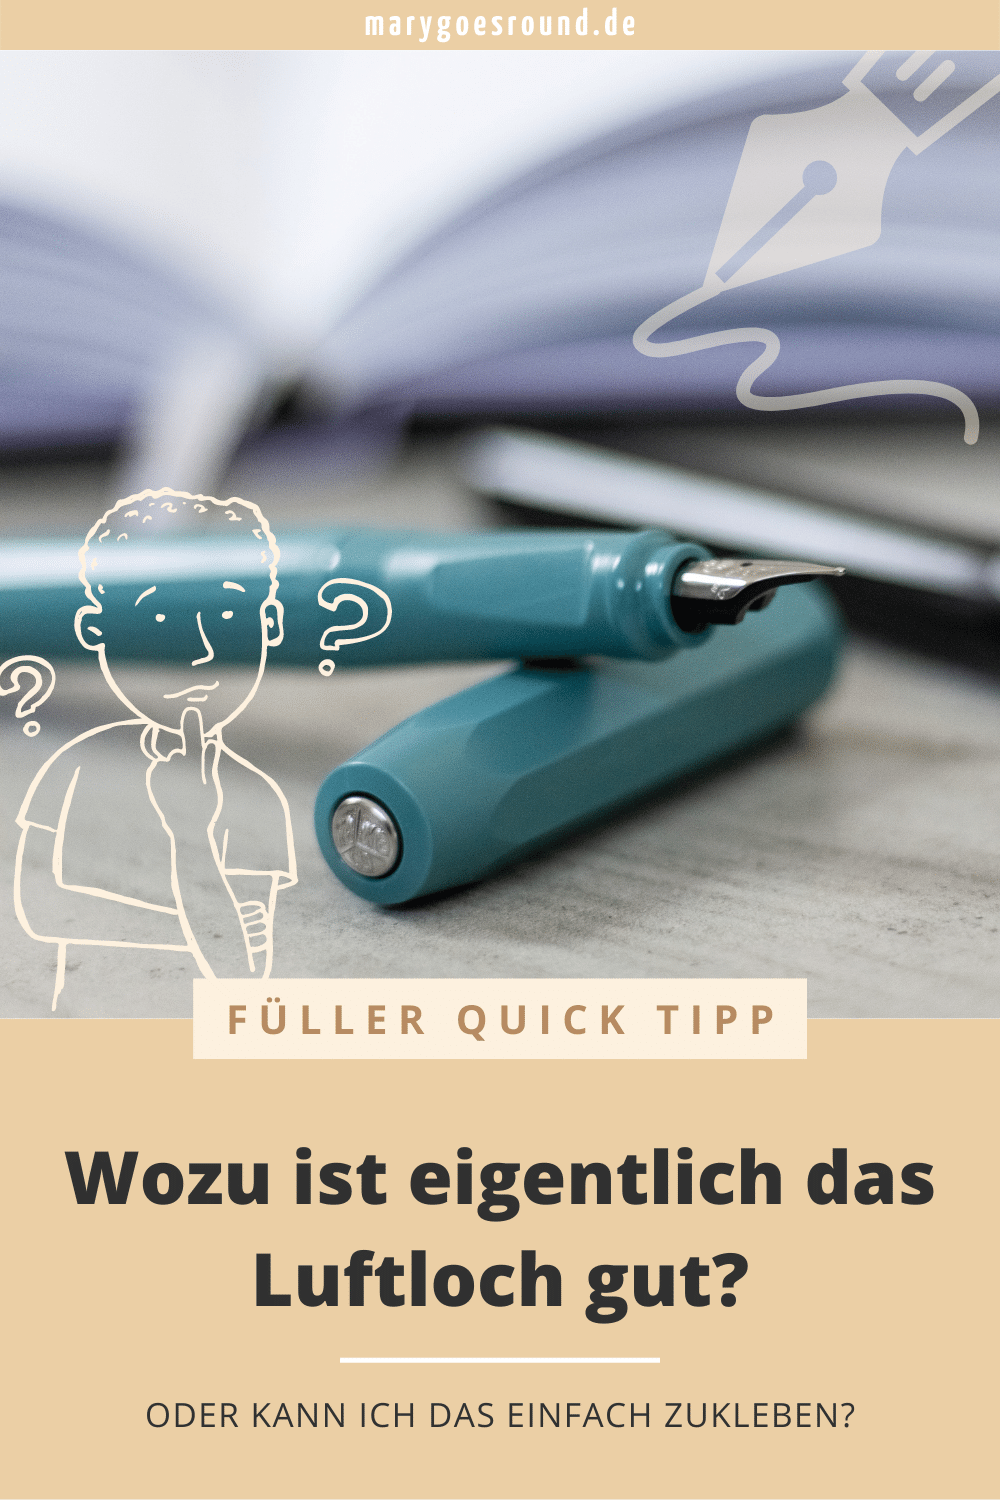 Füller Quick Tipp: Luftloch in der Füllerkappe